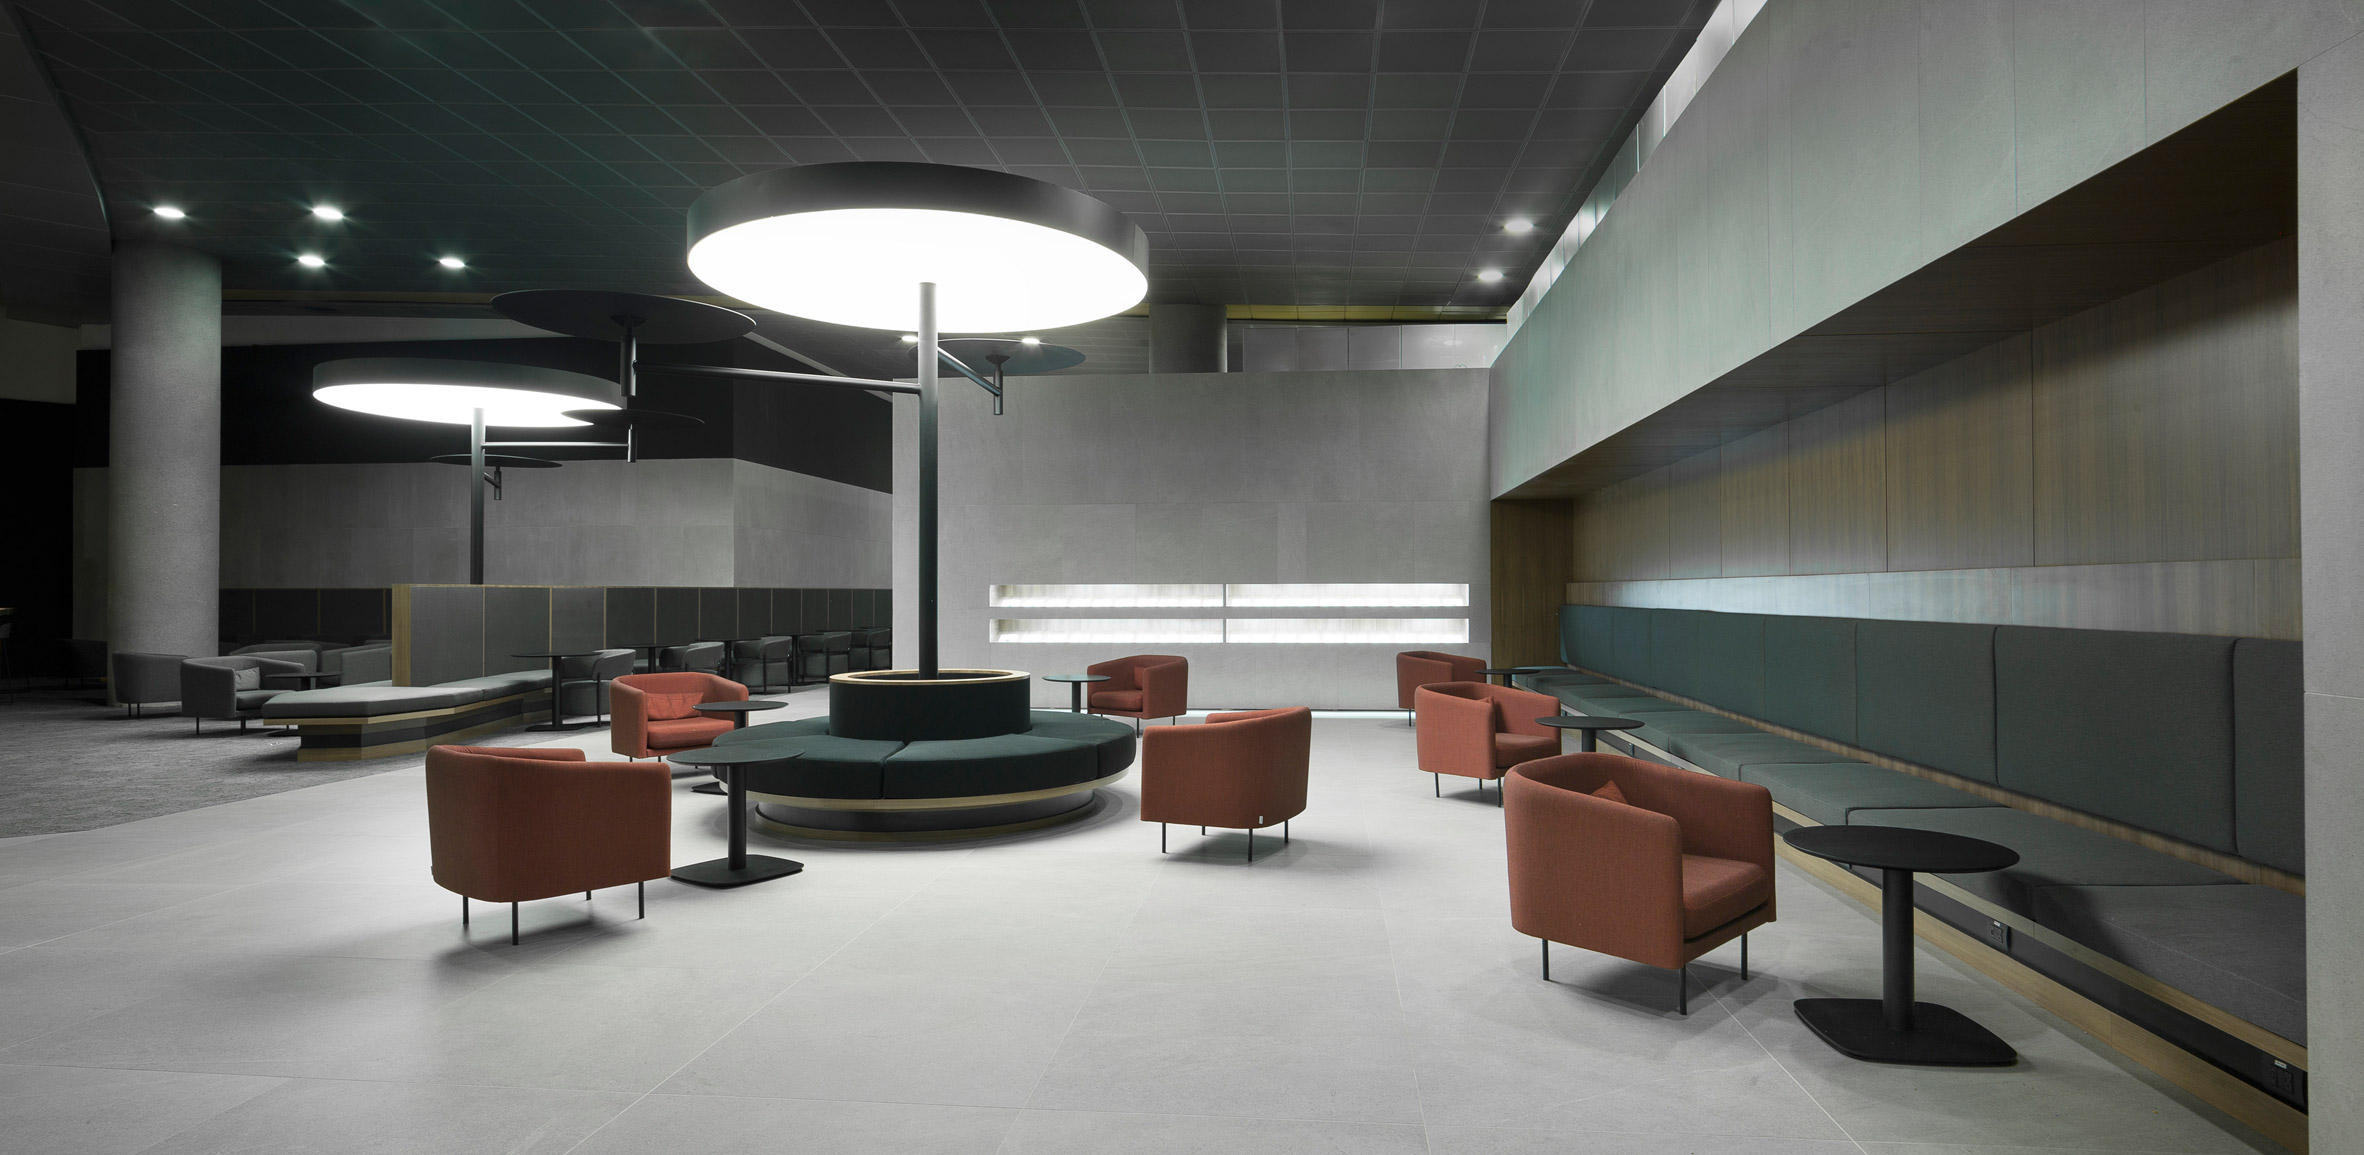 Francesc Rifé Studio designs greyscale Avianca Lounges at Bogotá airport